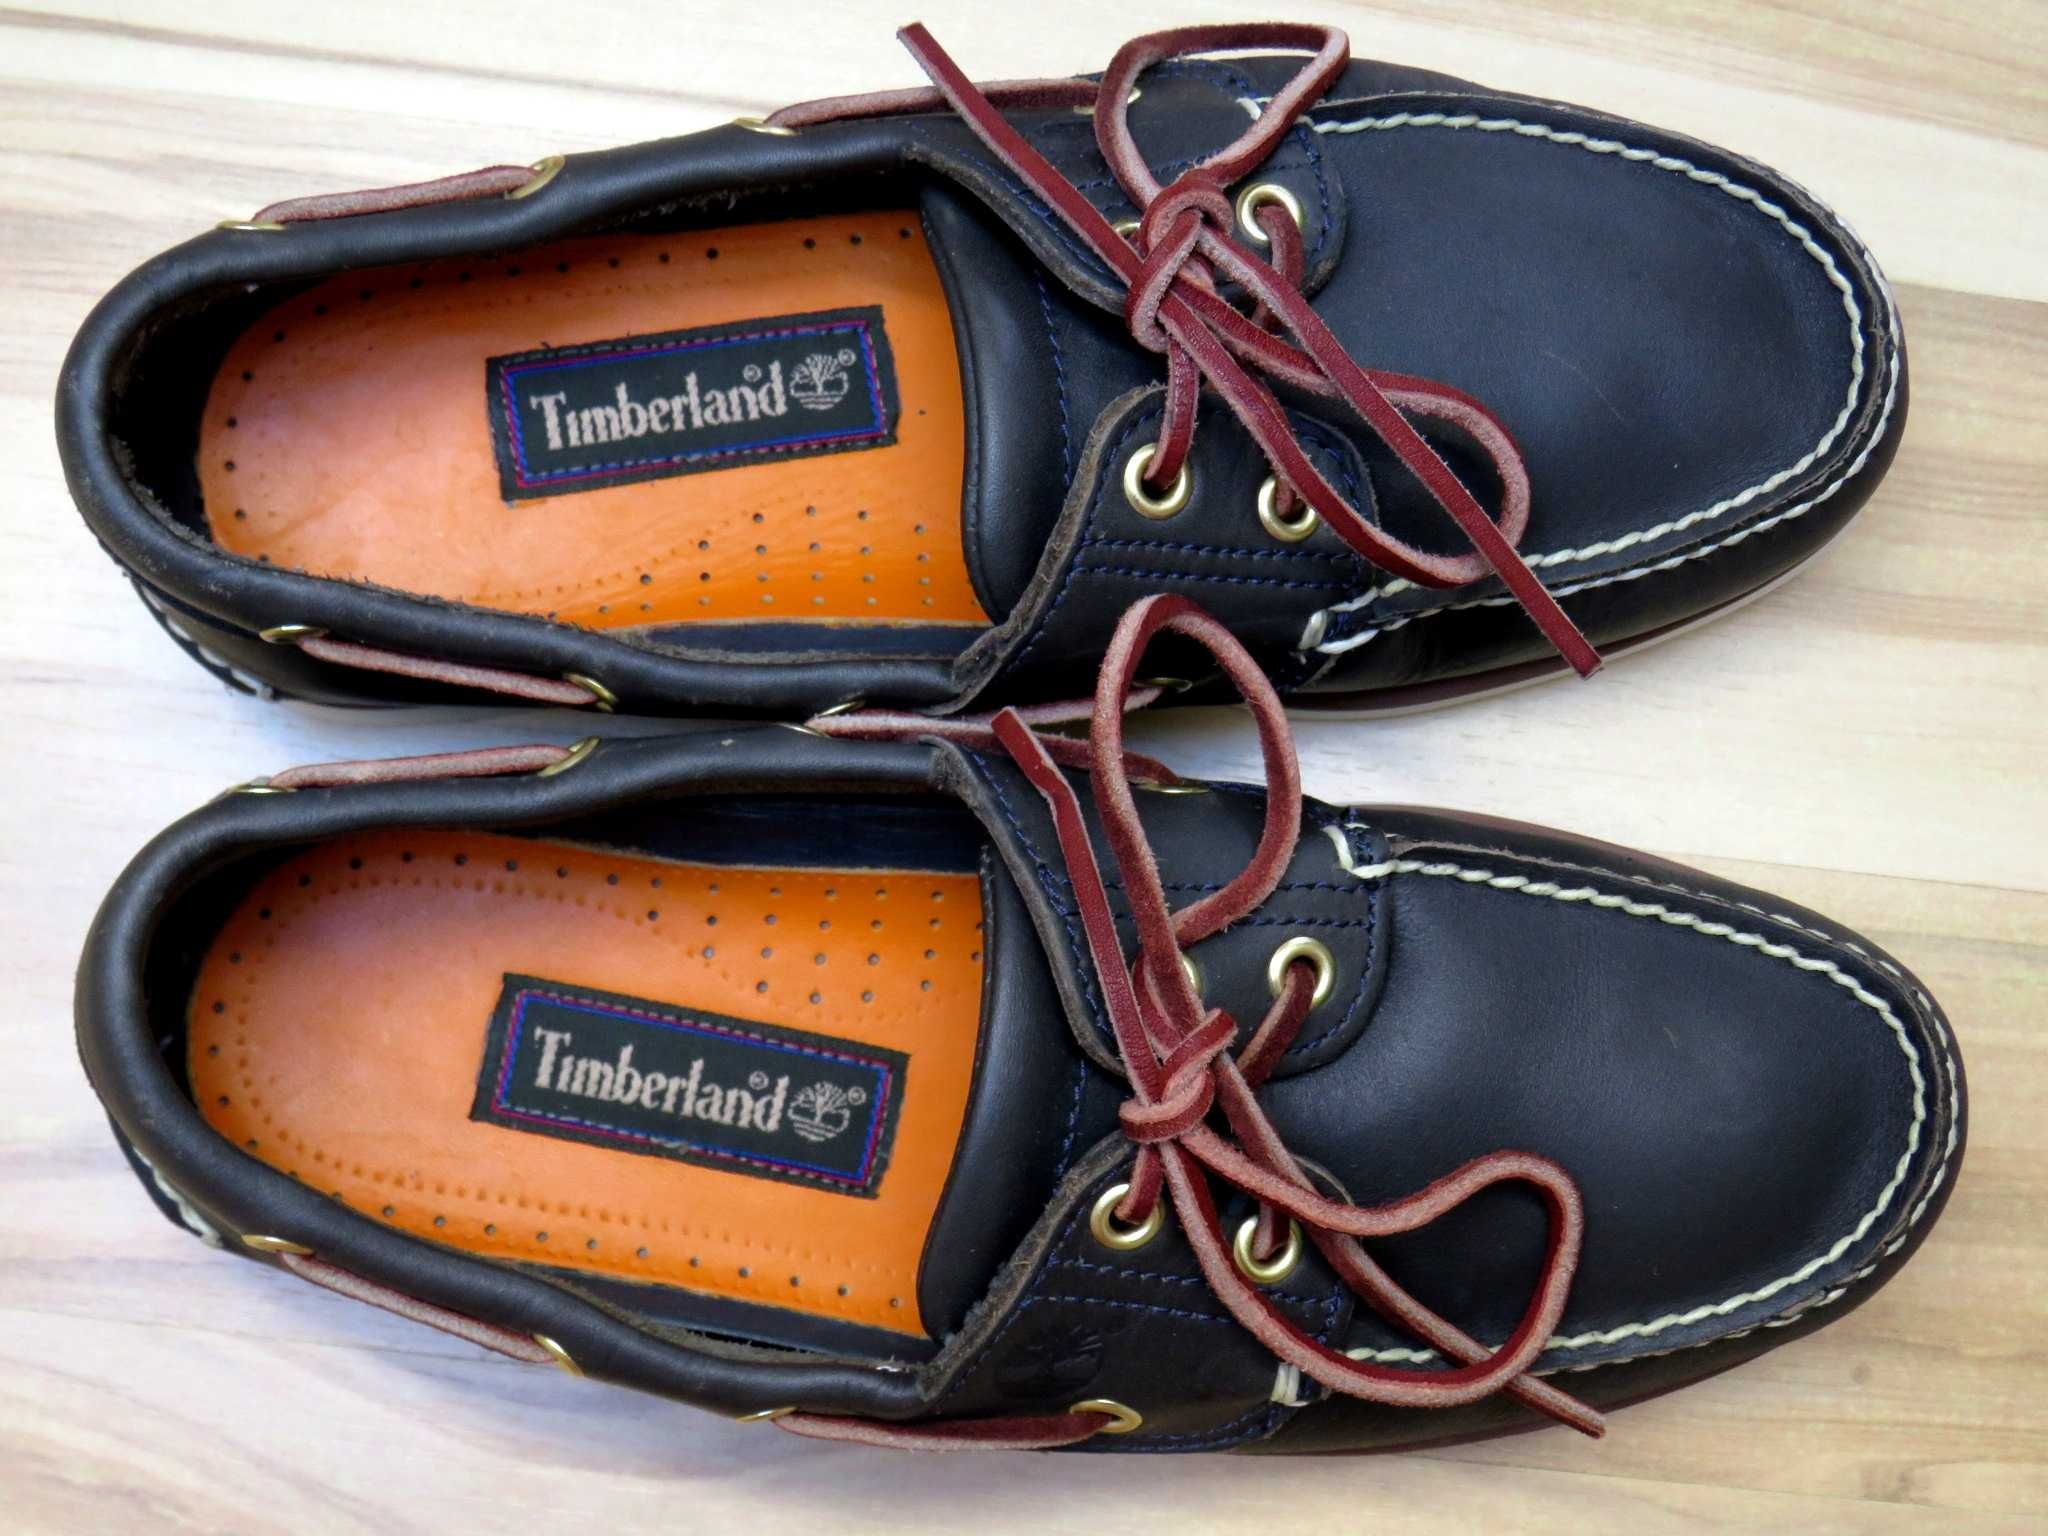 Timberland mokasyny buty r 40 -70%